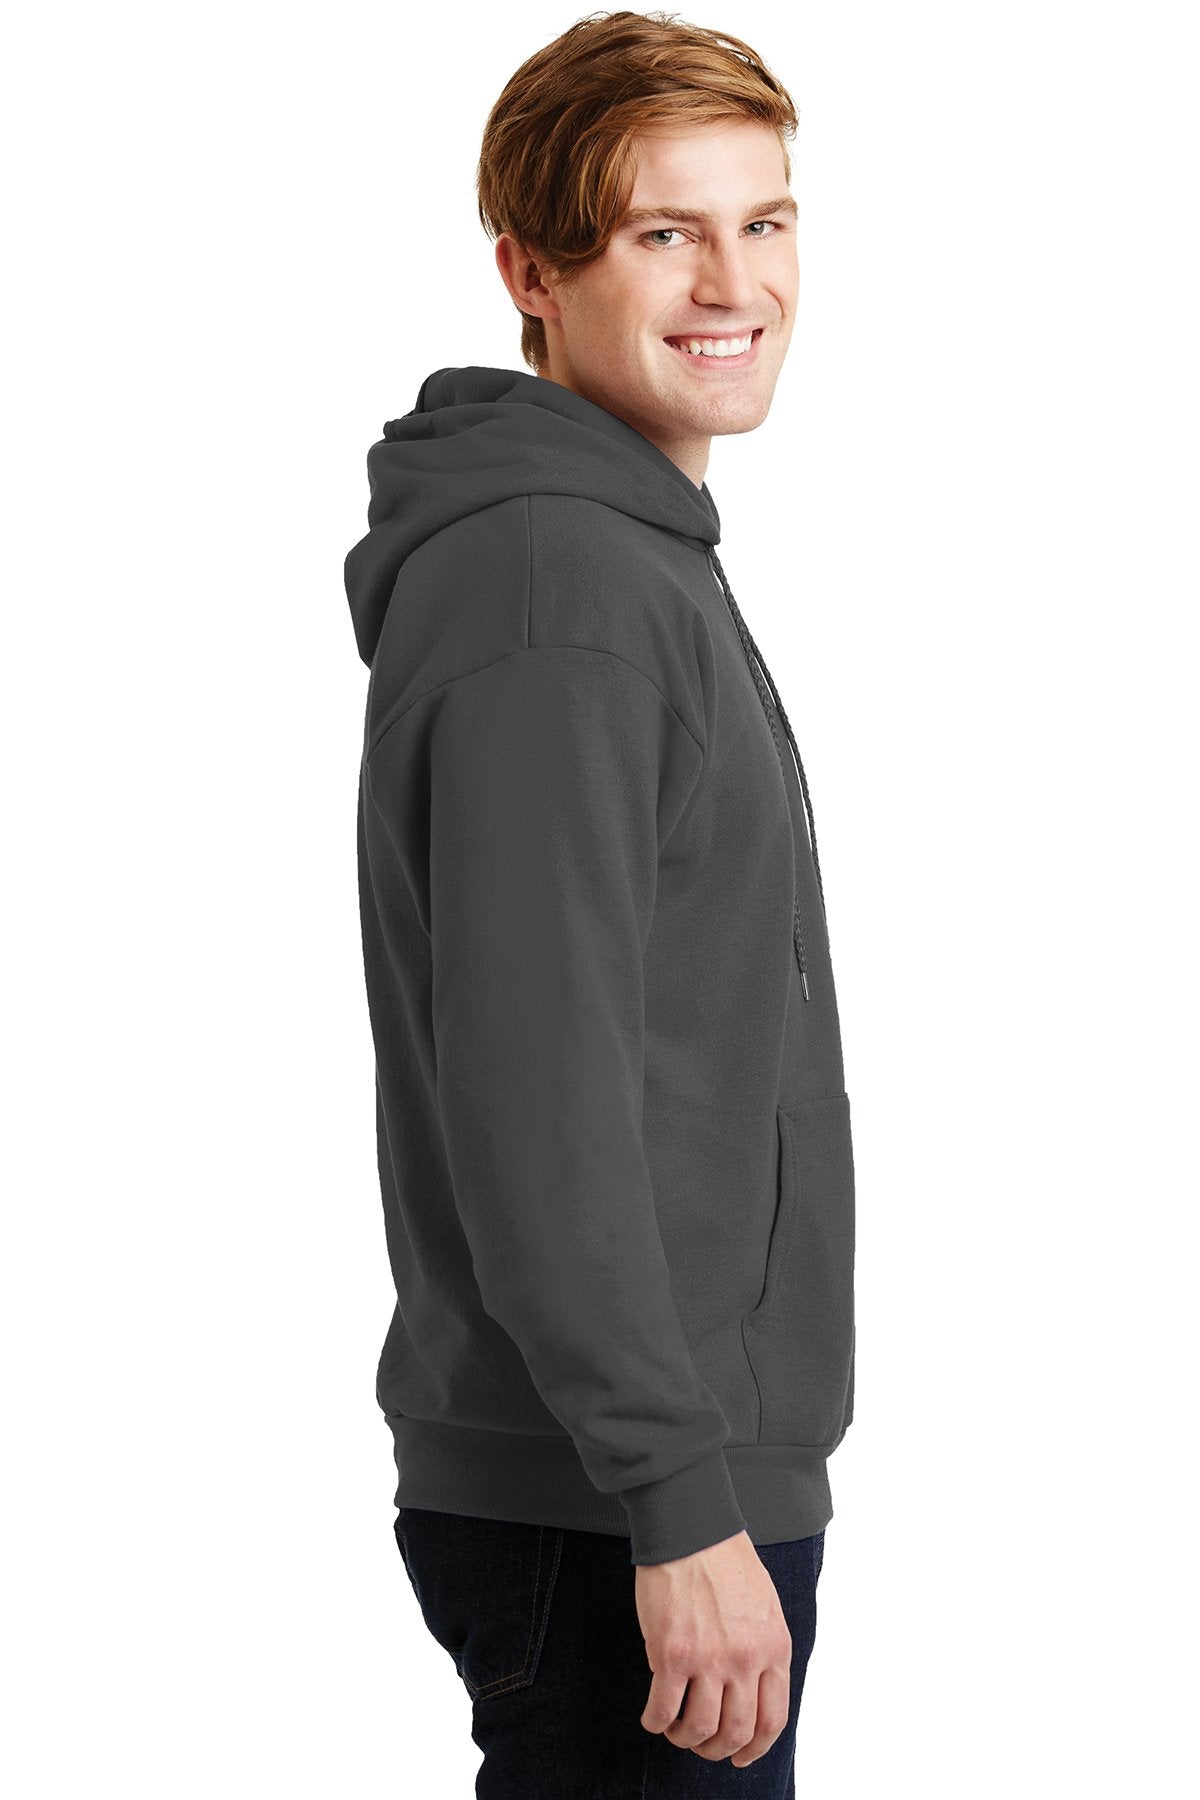 Hanes Ecosmart Pullover Hooded Sweatshirt P170 Smoke Grey